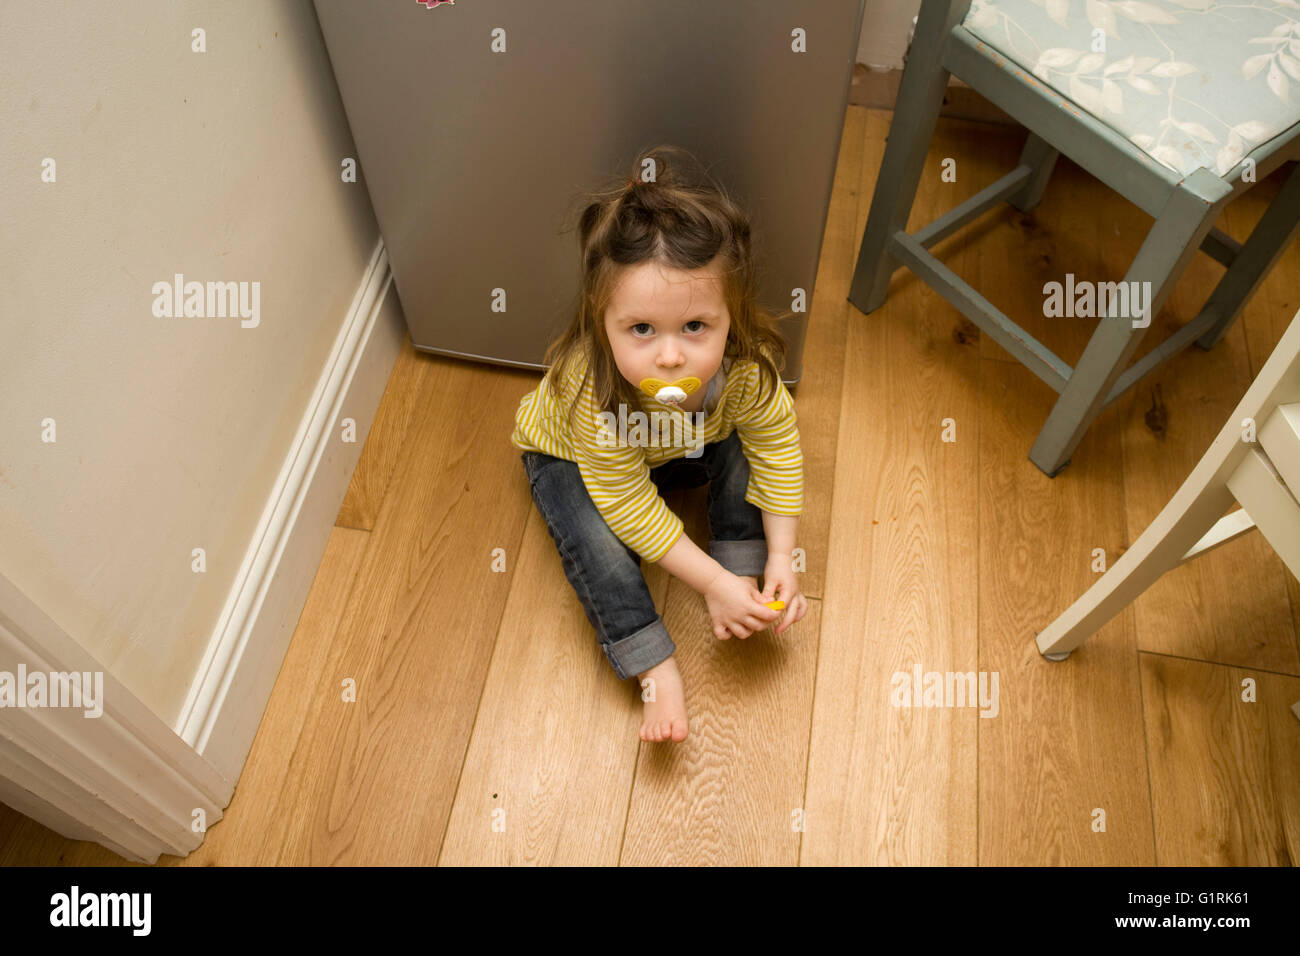 female toddler sat on floor in kitchen Stock Photo